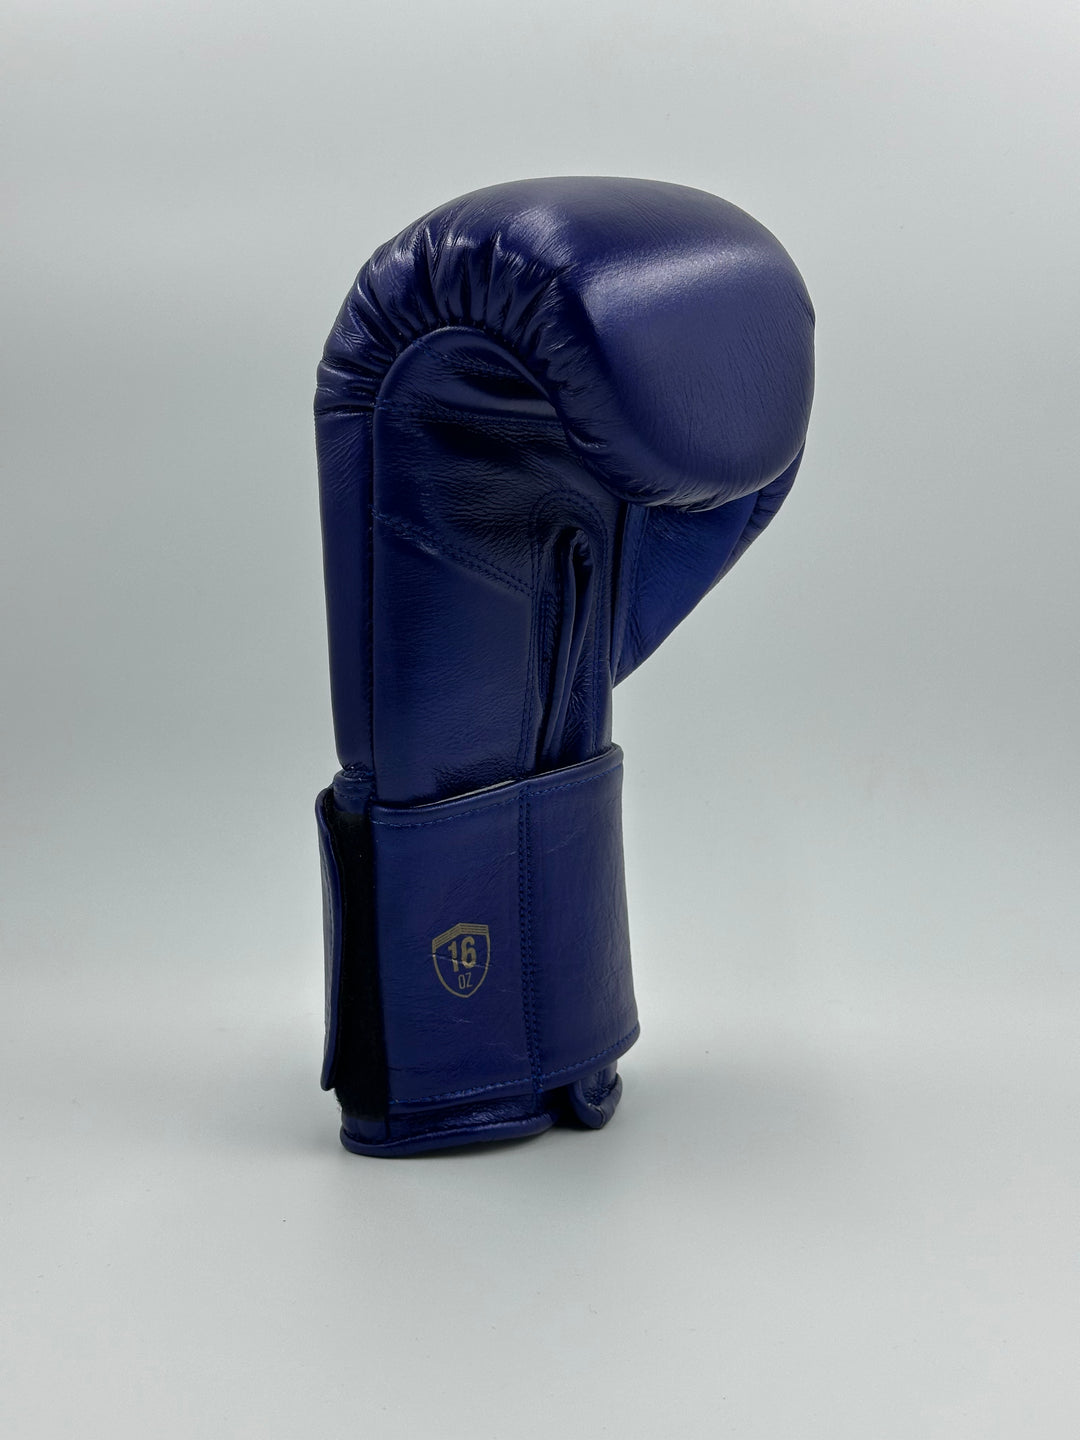 G12000 Boxing Gloves - MIDNIGHT BLUE – Canadian Hook